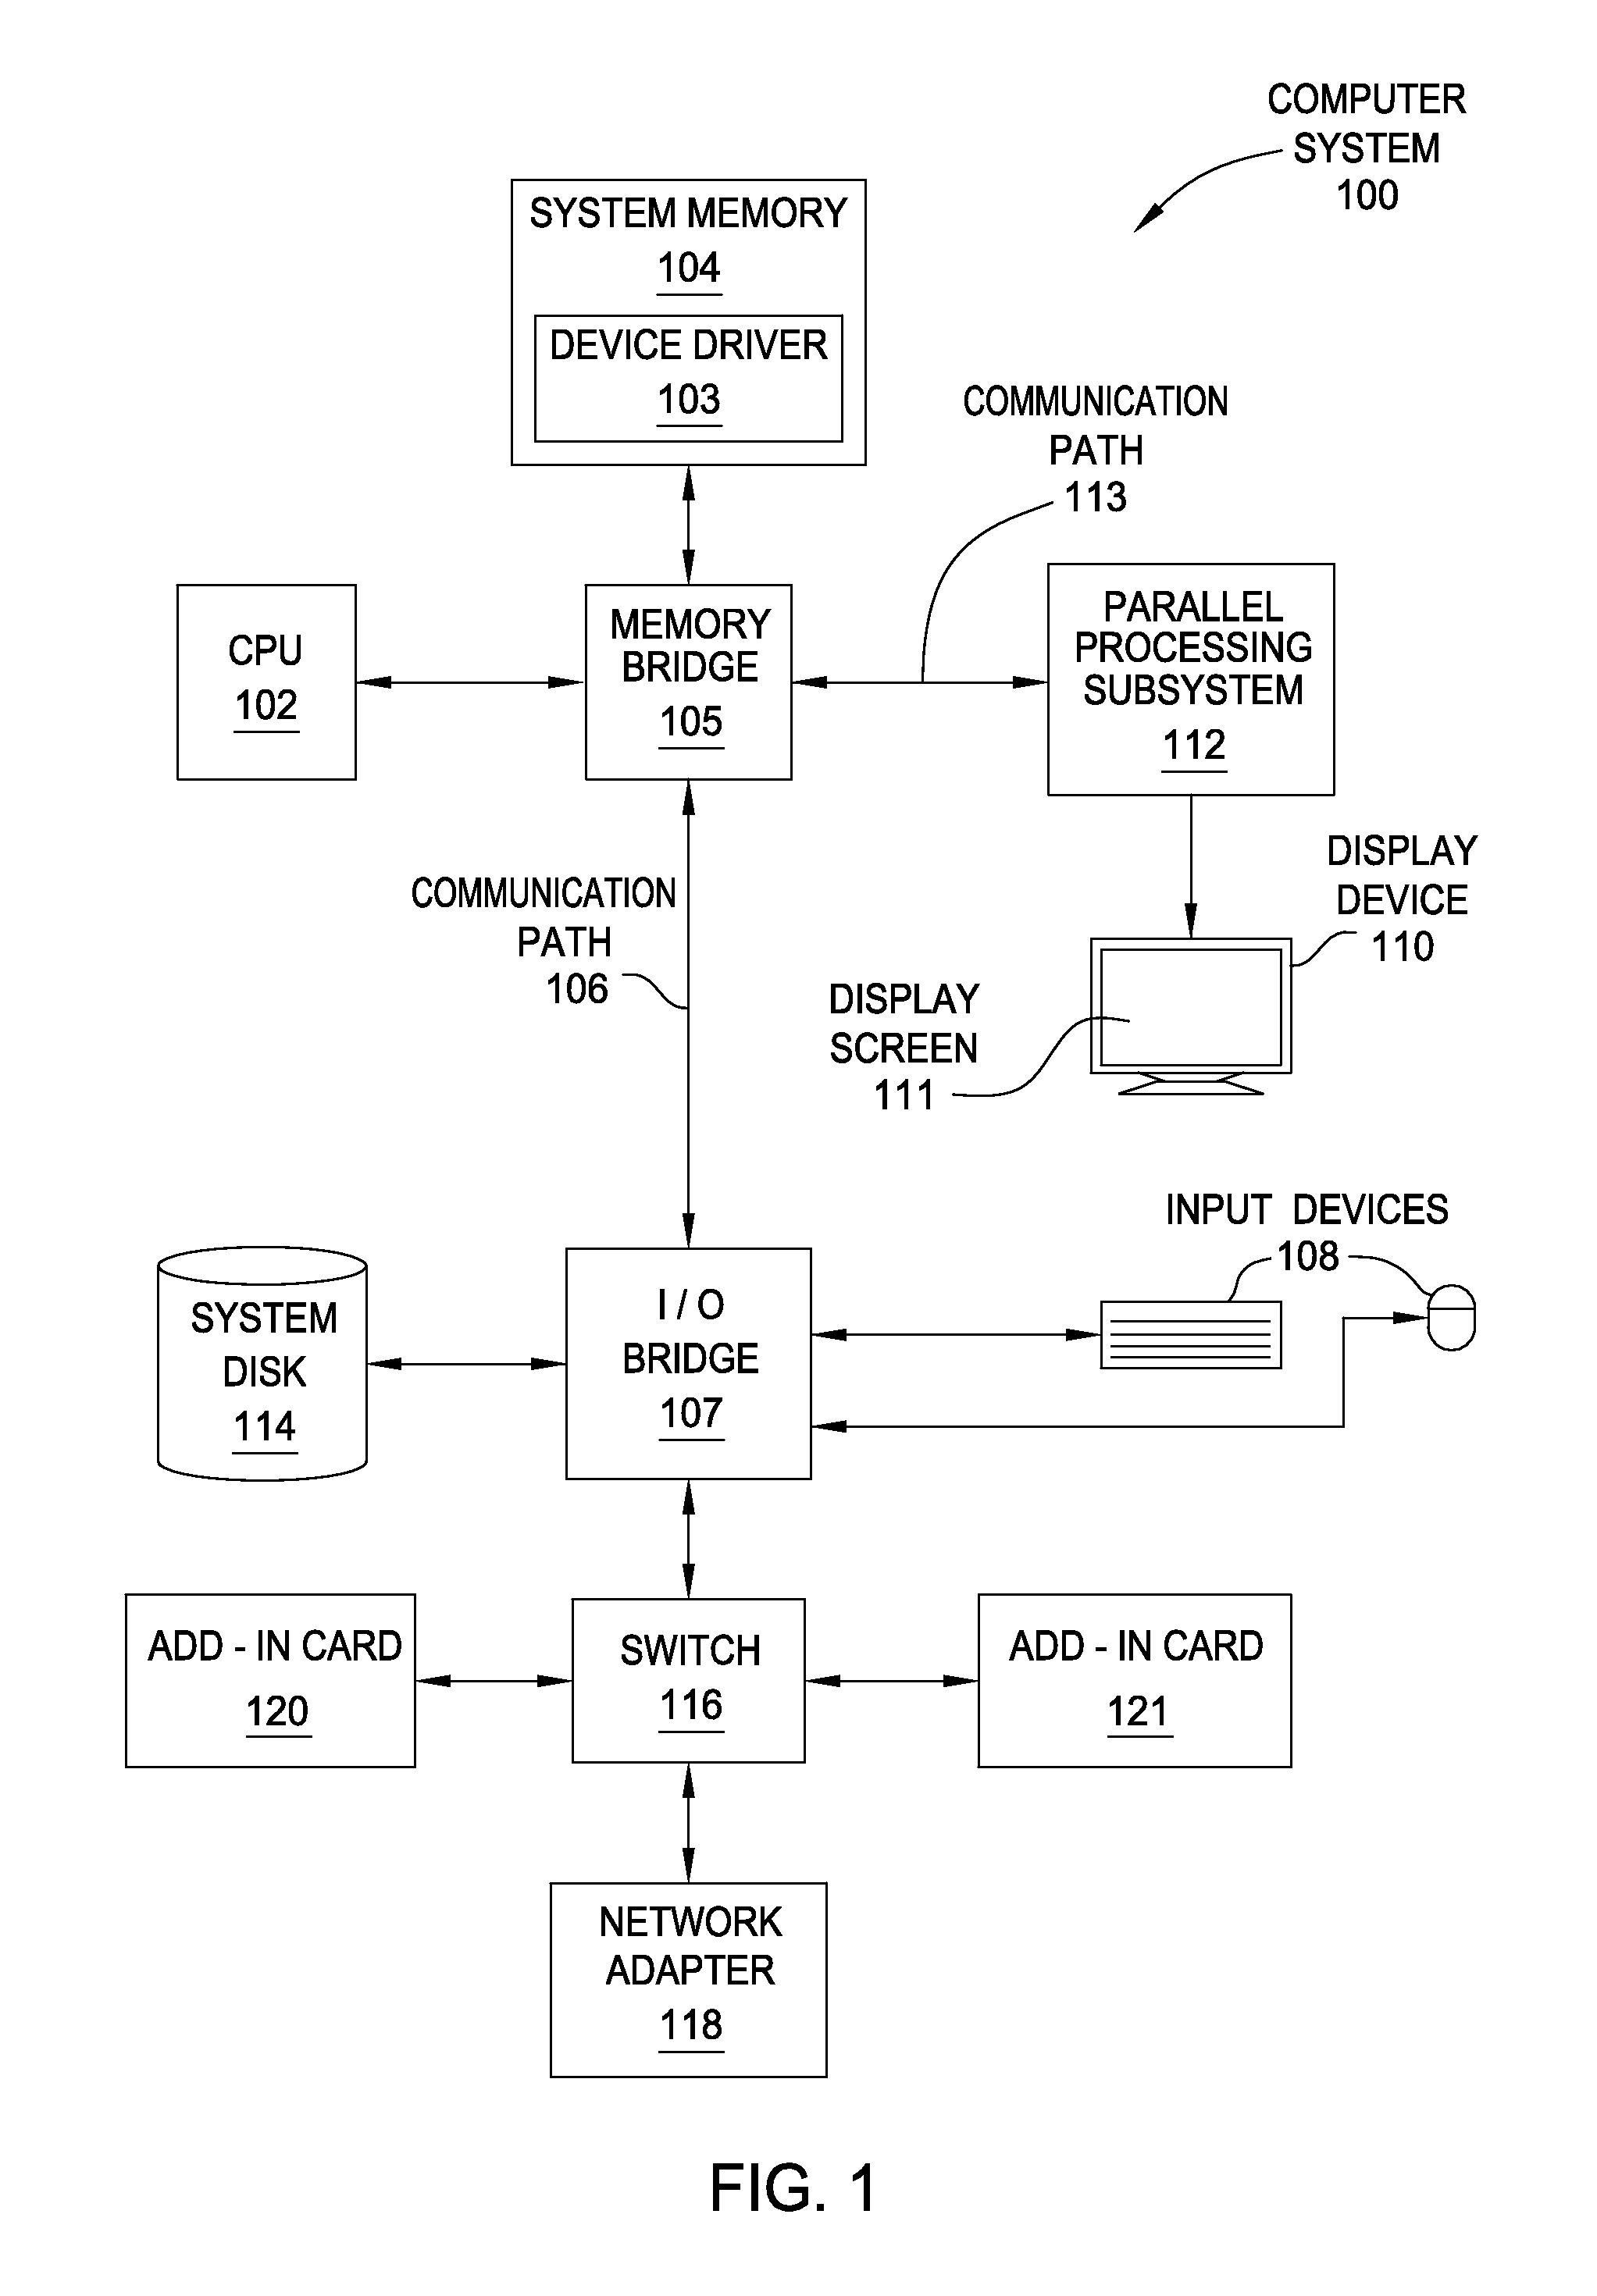 Technique for improving static random-access memory sense amplifier voltage differential